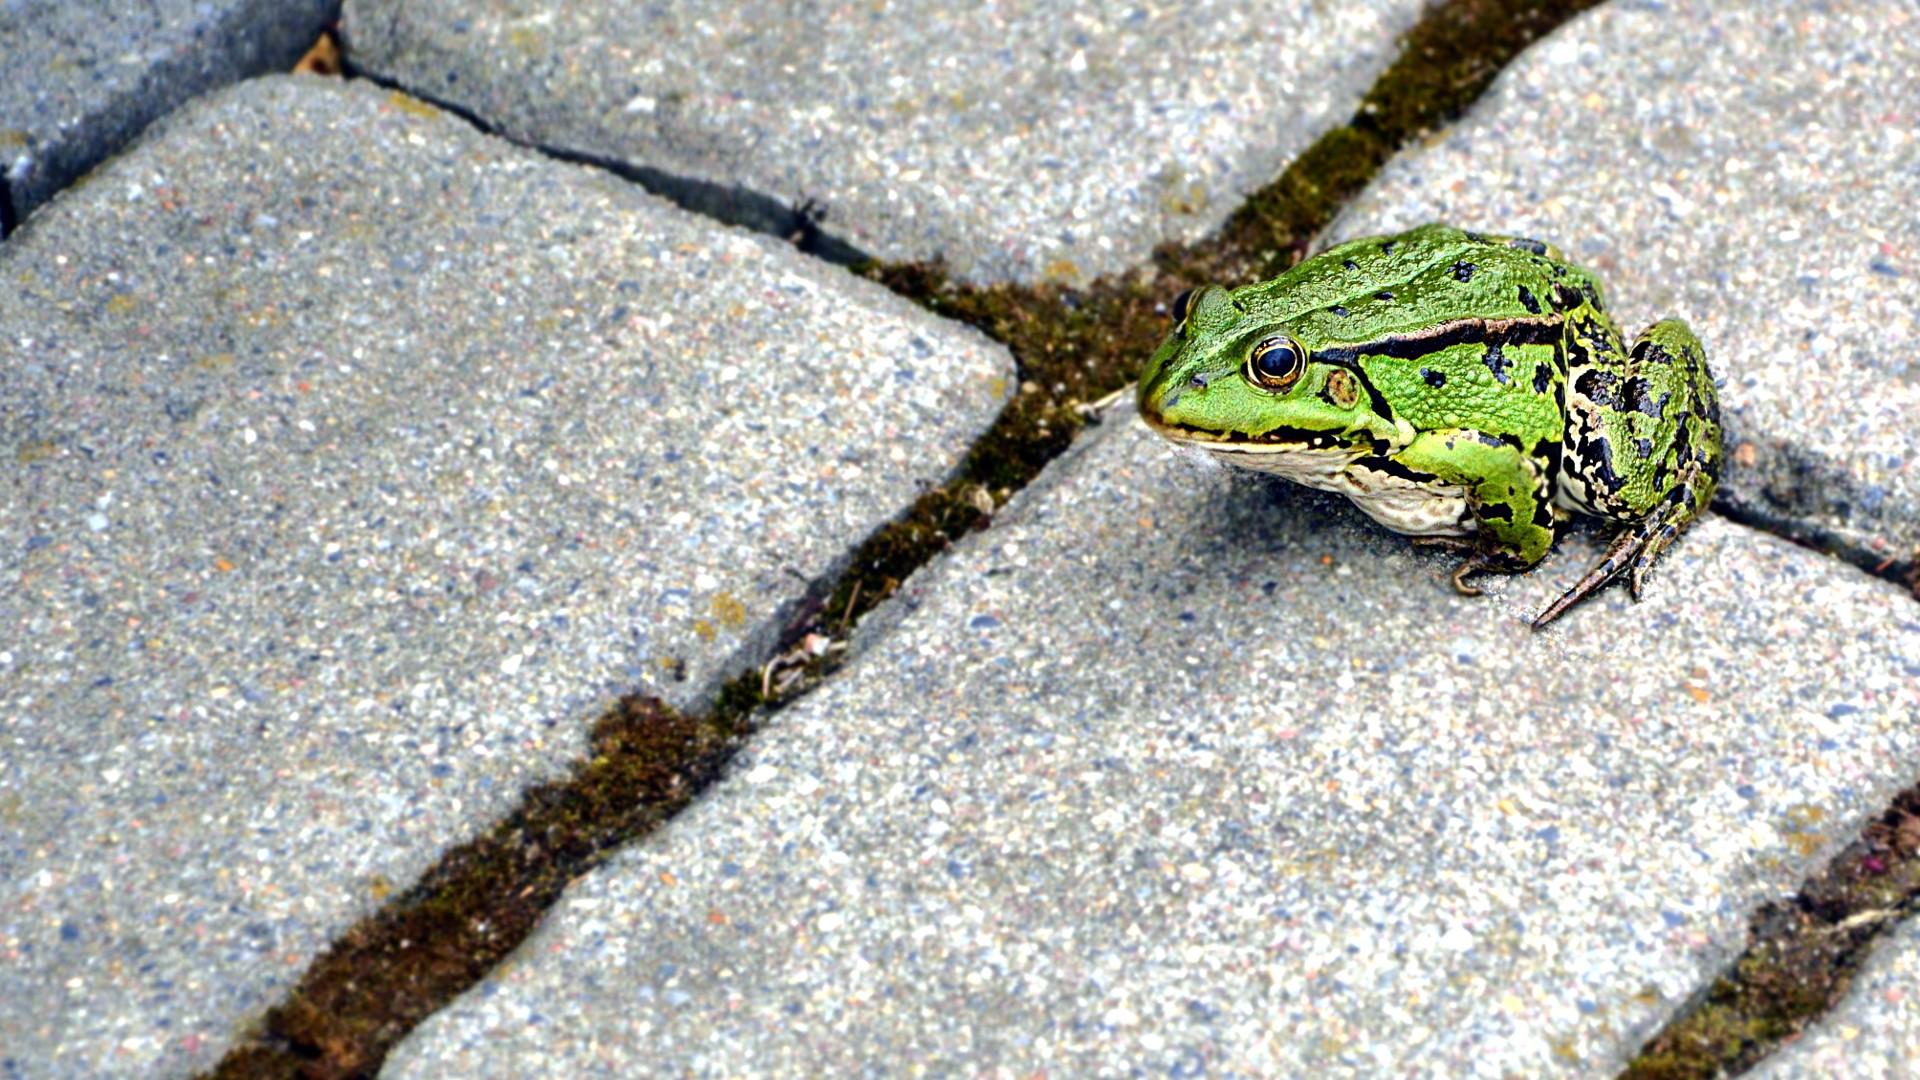 General 1920x1080 frog animals pavements amphibian green